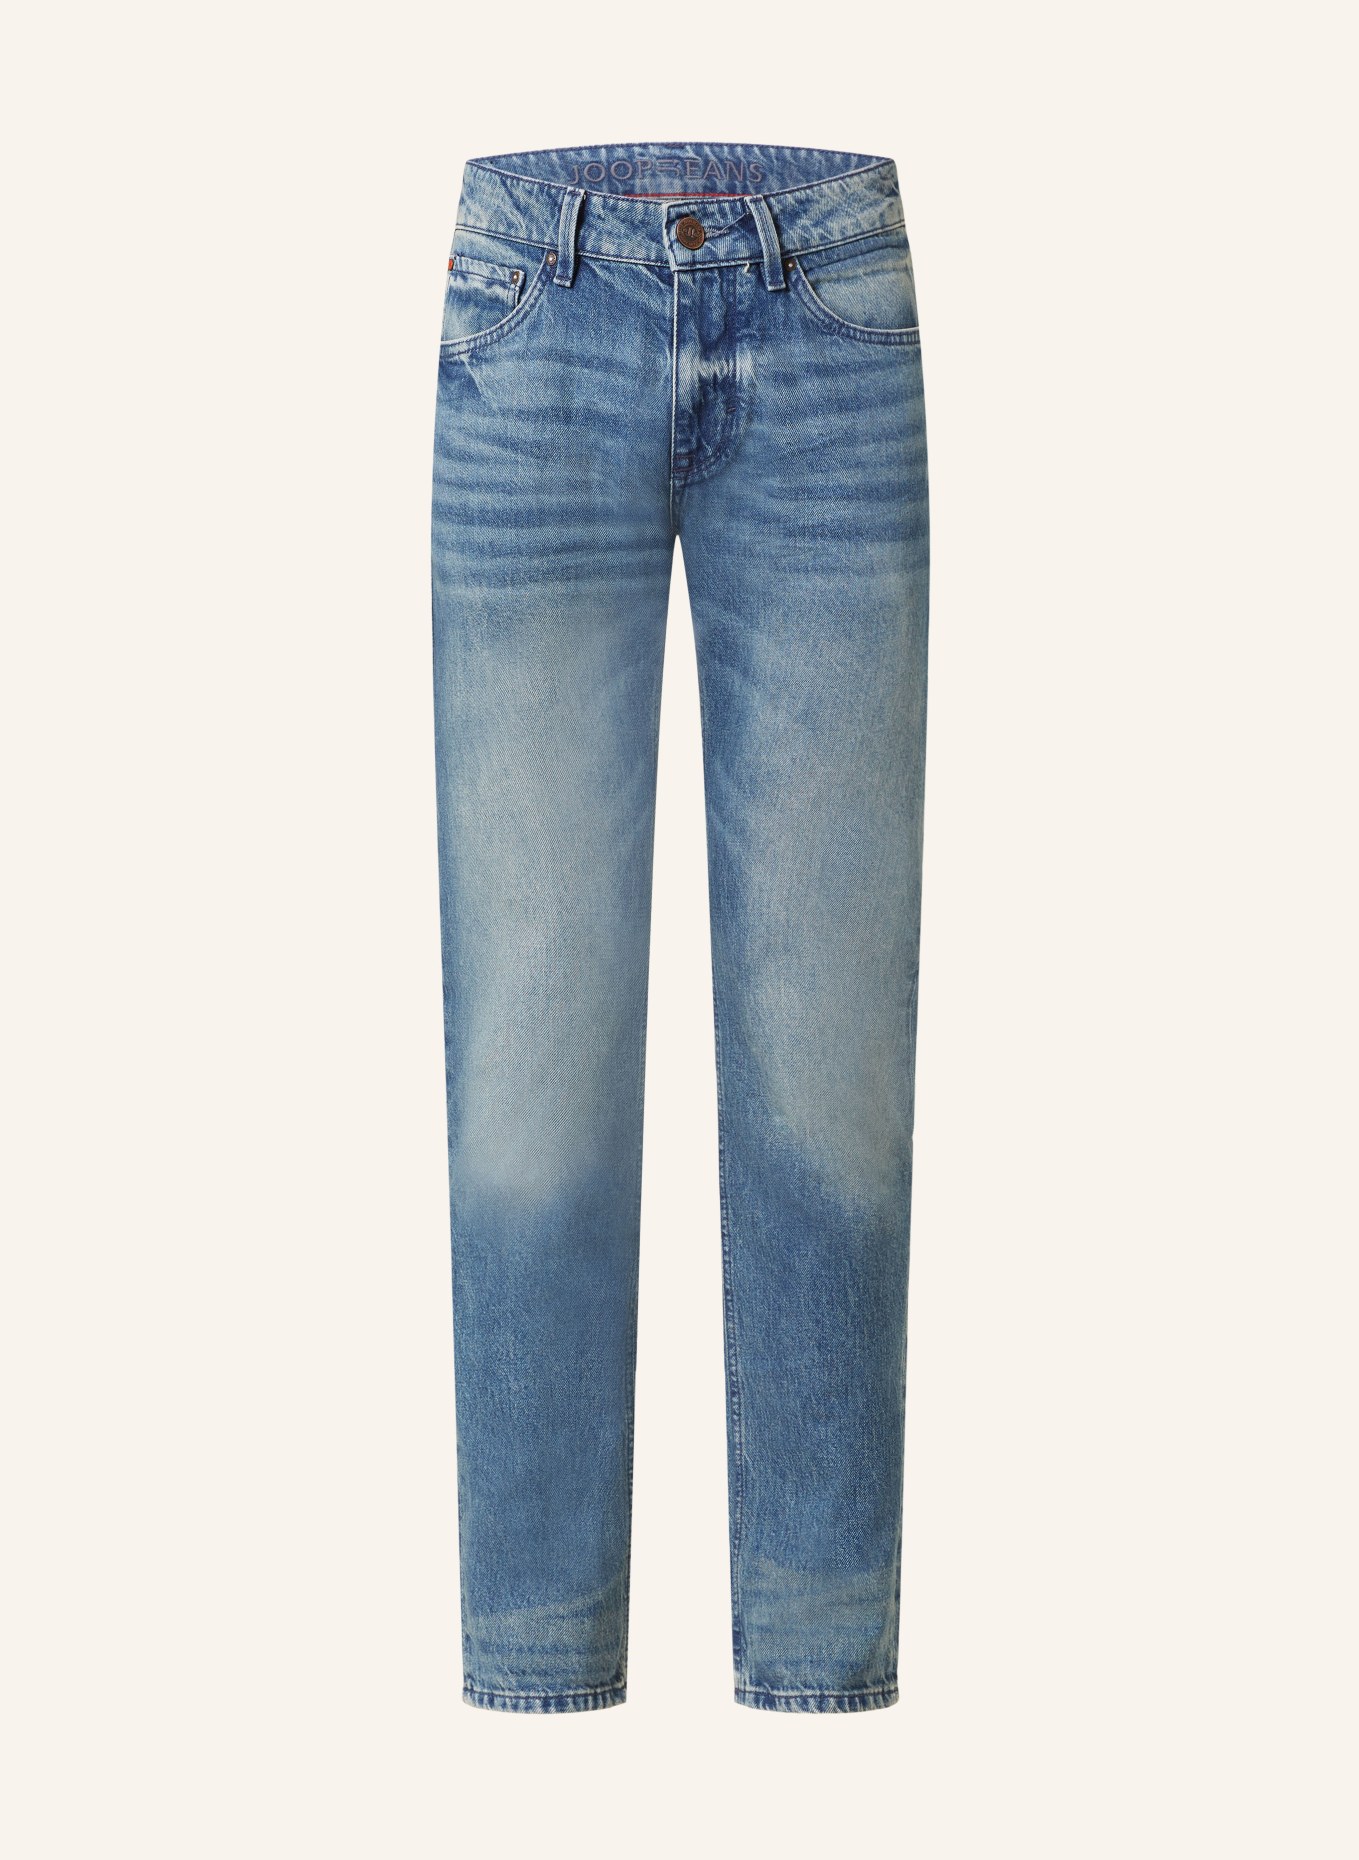 JOOP! JEANS Jeans STEPHEN Slim Fit, Farbe: 425 Medium Blue                425 (Bild 1)